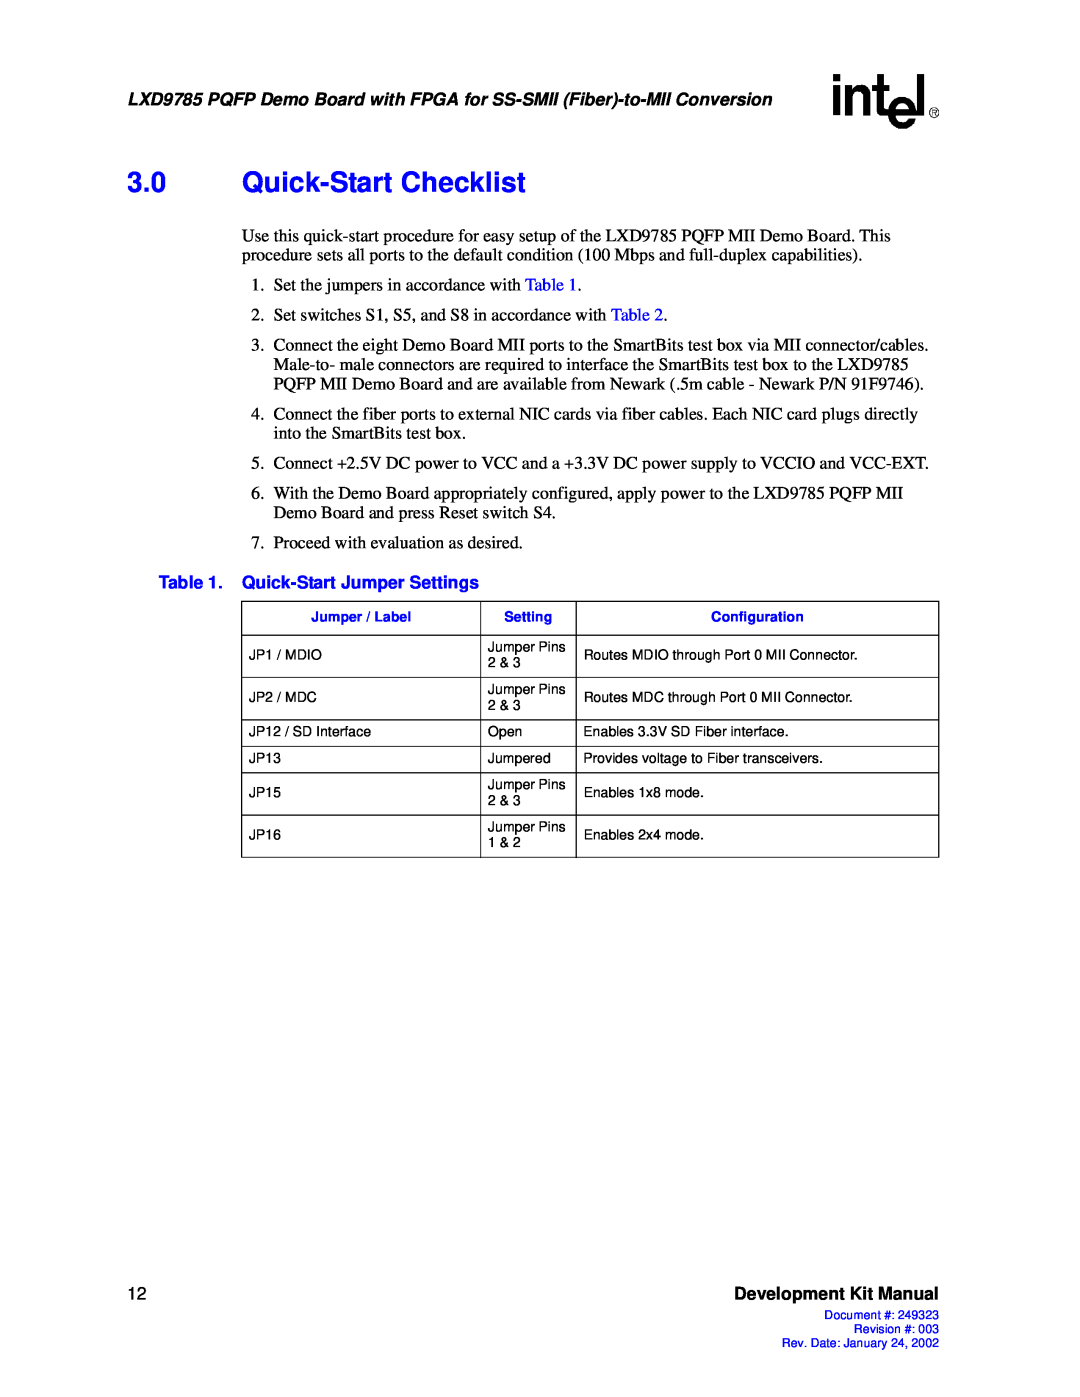 Intel 249323-003 manual Quick-Start Checklist, Quick-Start Jumper Settings 